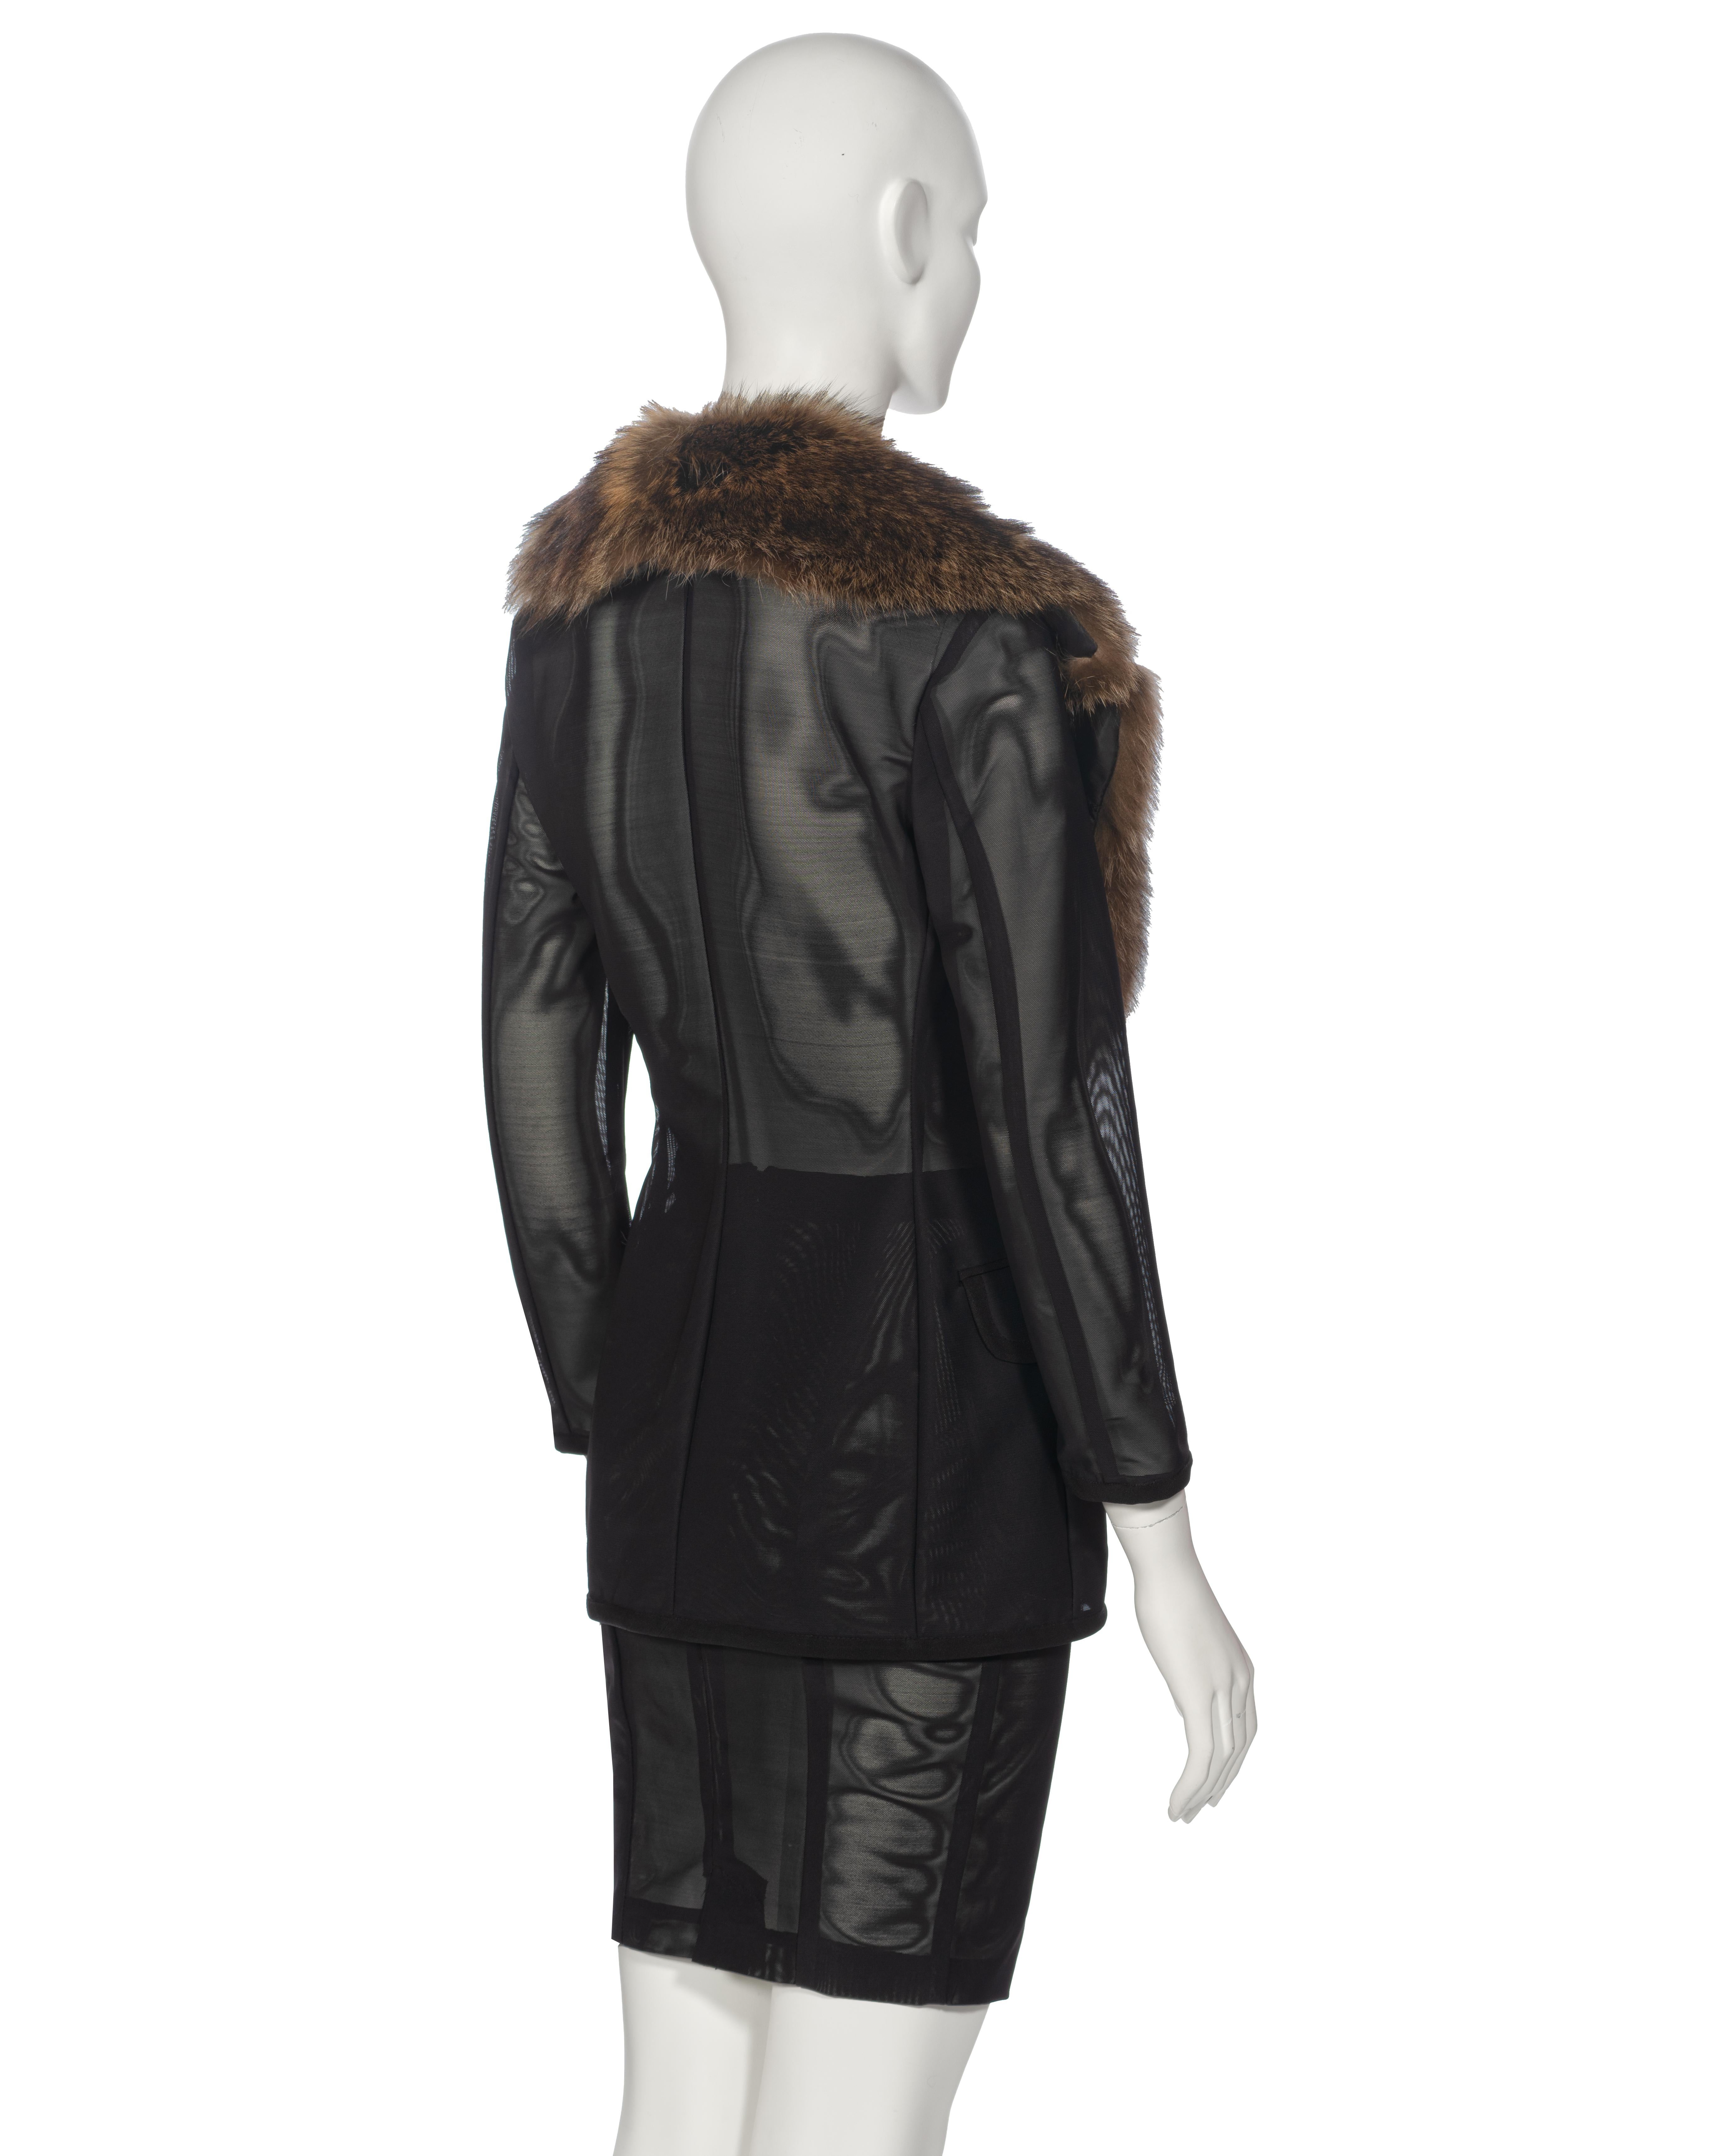 Dolce & Gabbana Black Power Net Skirt Suit with Fur Collar, fw 1995 6